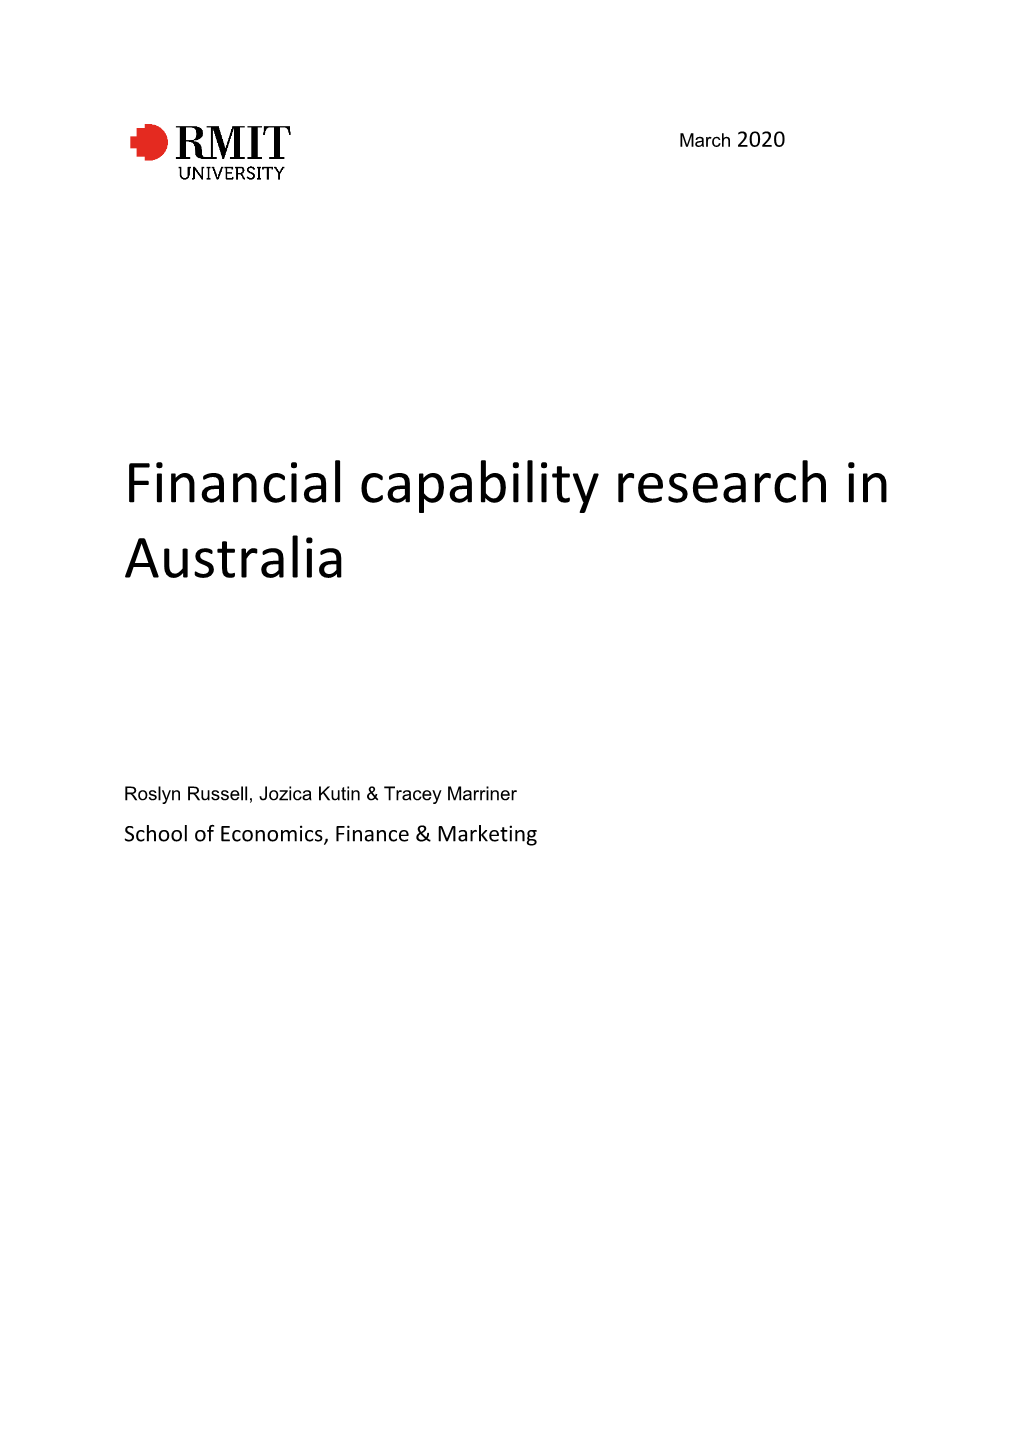 Financial Capability Research in Australia